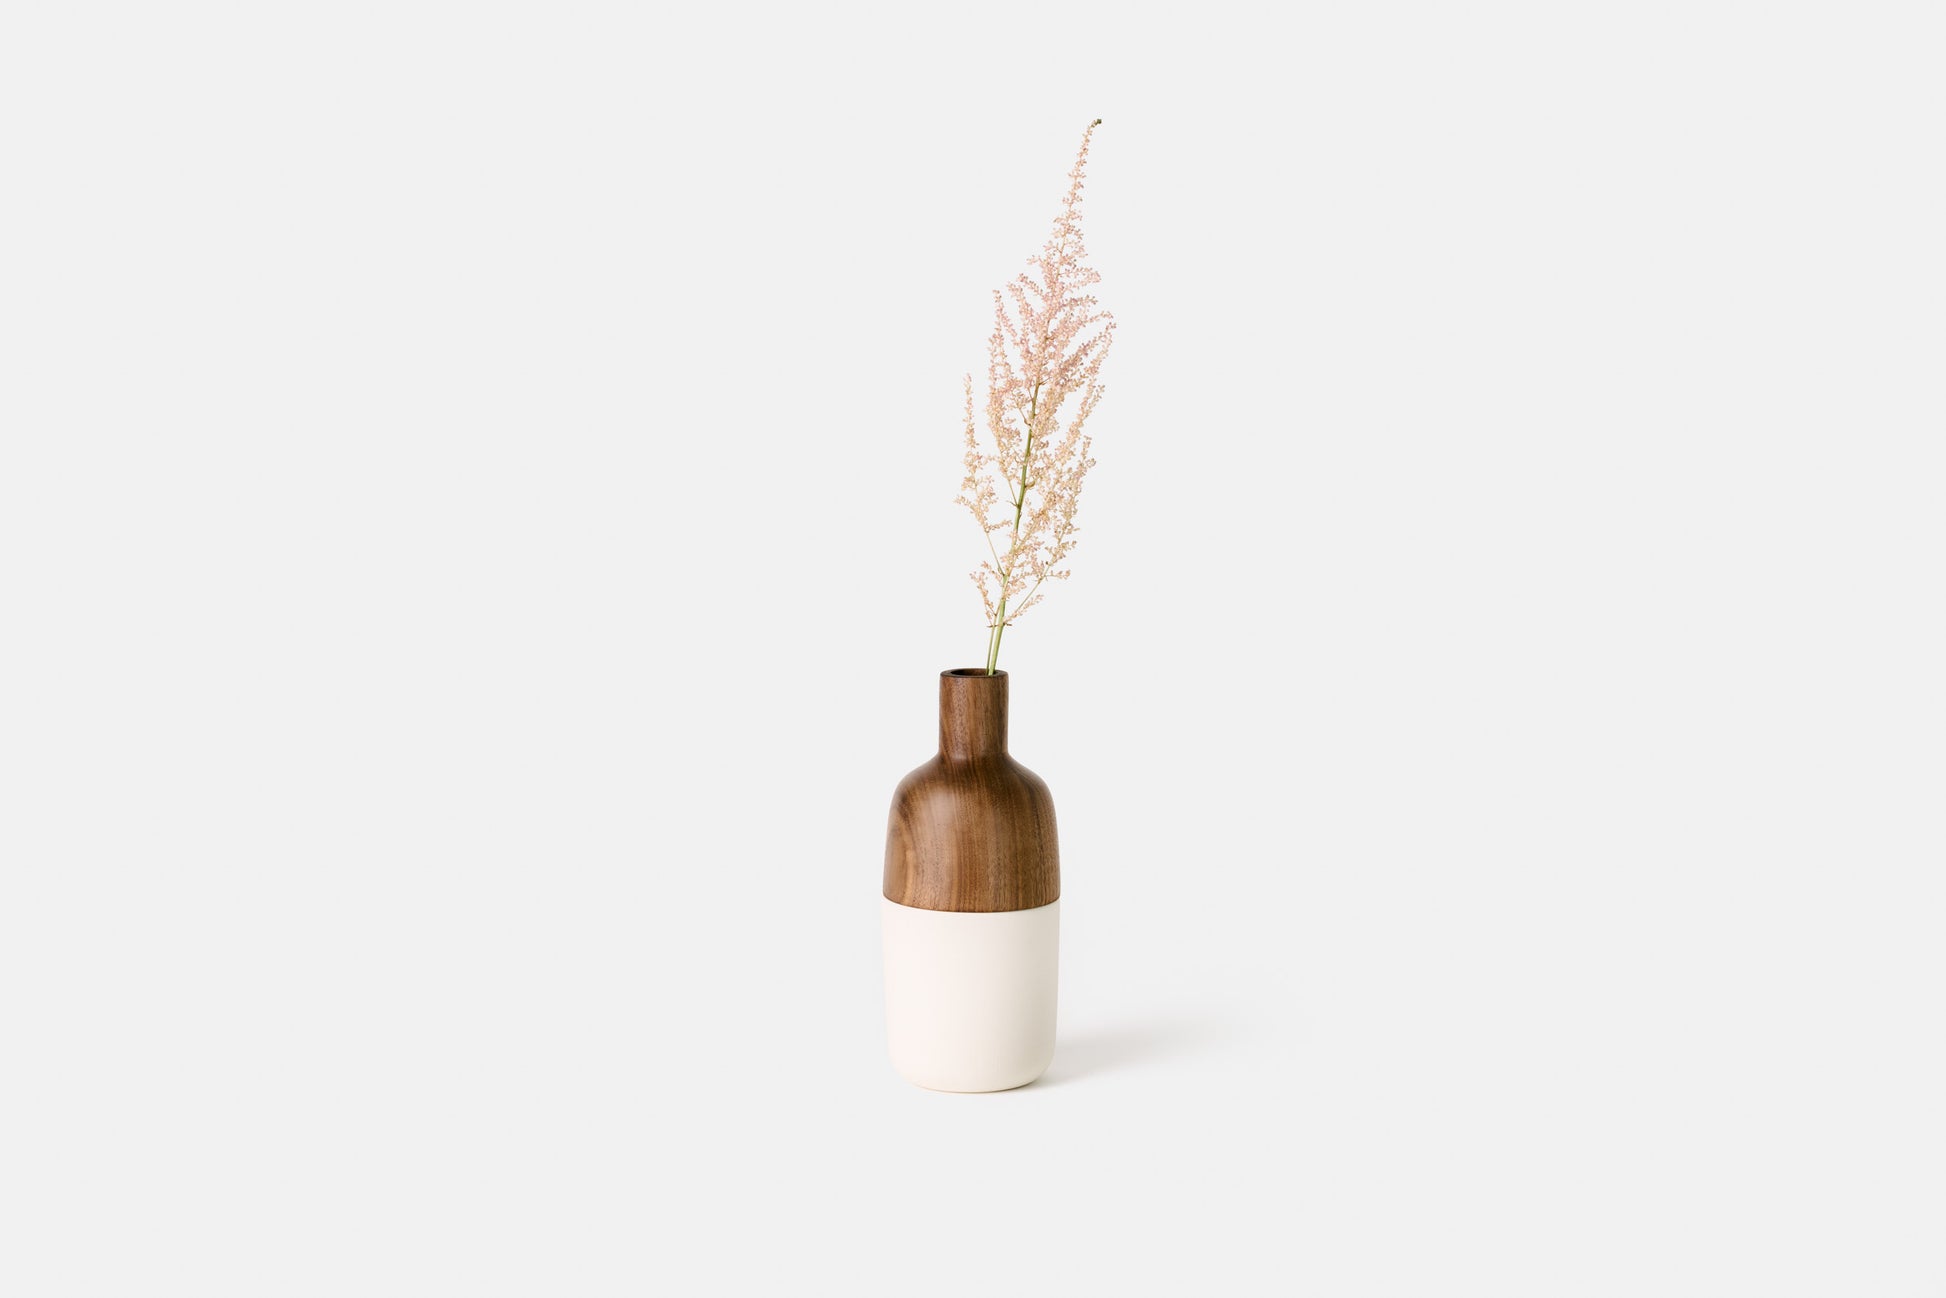 Walnut and white ceramic marais vase by Melanie Abrantes Designs.